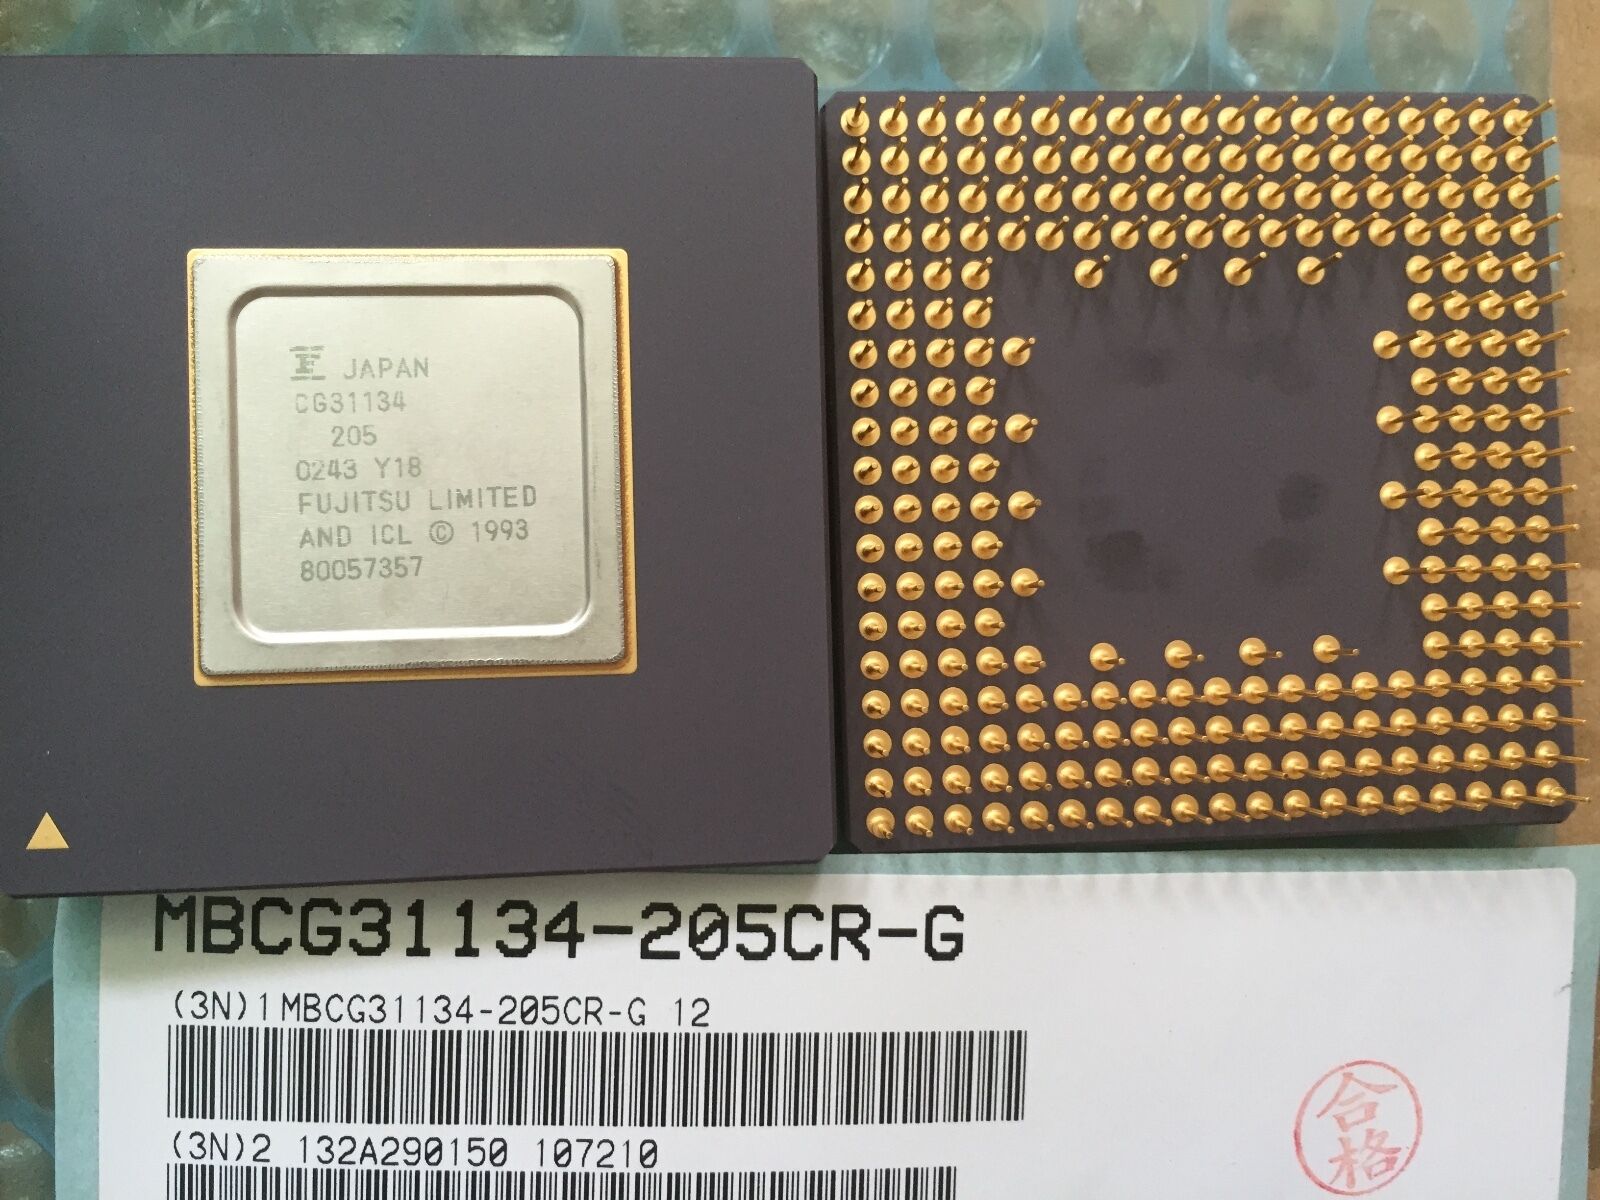 Fujitsu cg311 micron CMOS Gate arrays CG31134 Rare Vintage Gold CPU IC CHIP 1993